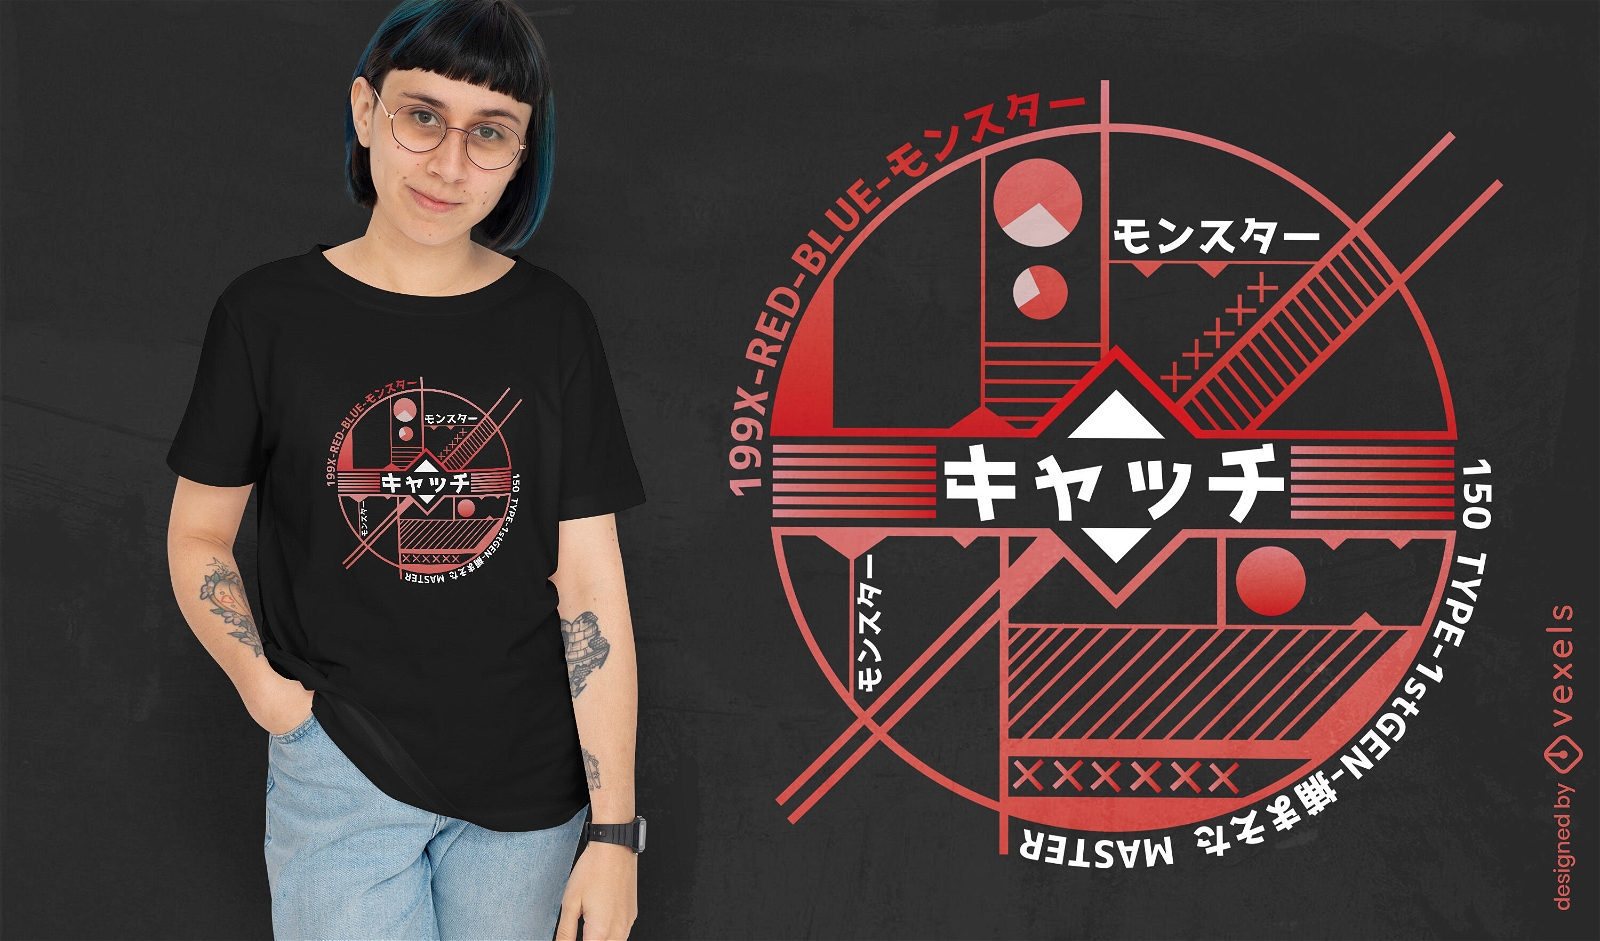 Catch Ball Anime T-shirt Design